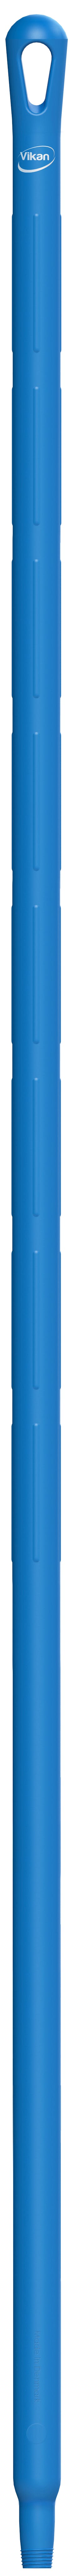 Vikan Ultra Hygiene 2964 kunststof steel 170cm blauw